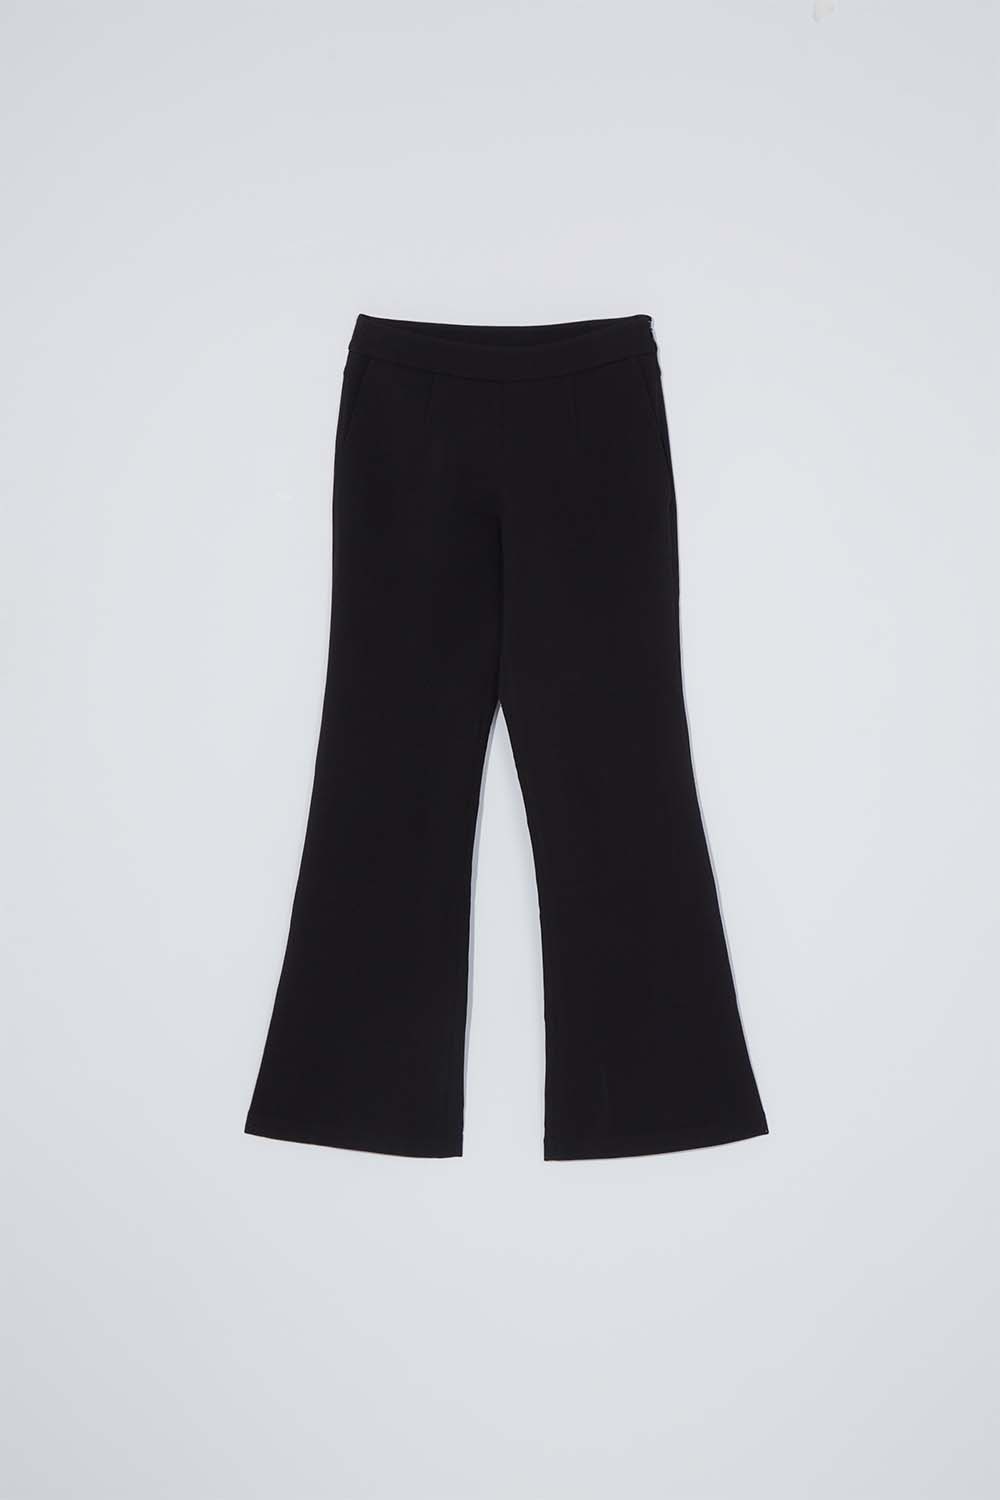 Semi flare pants(winter)_black